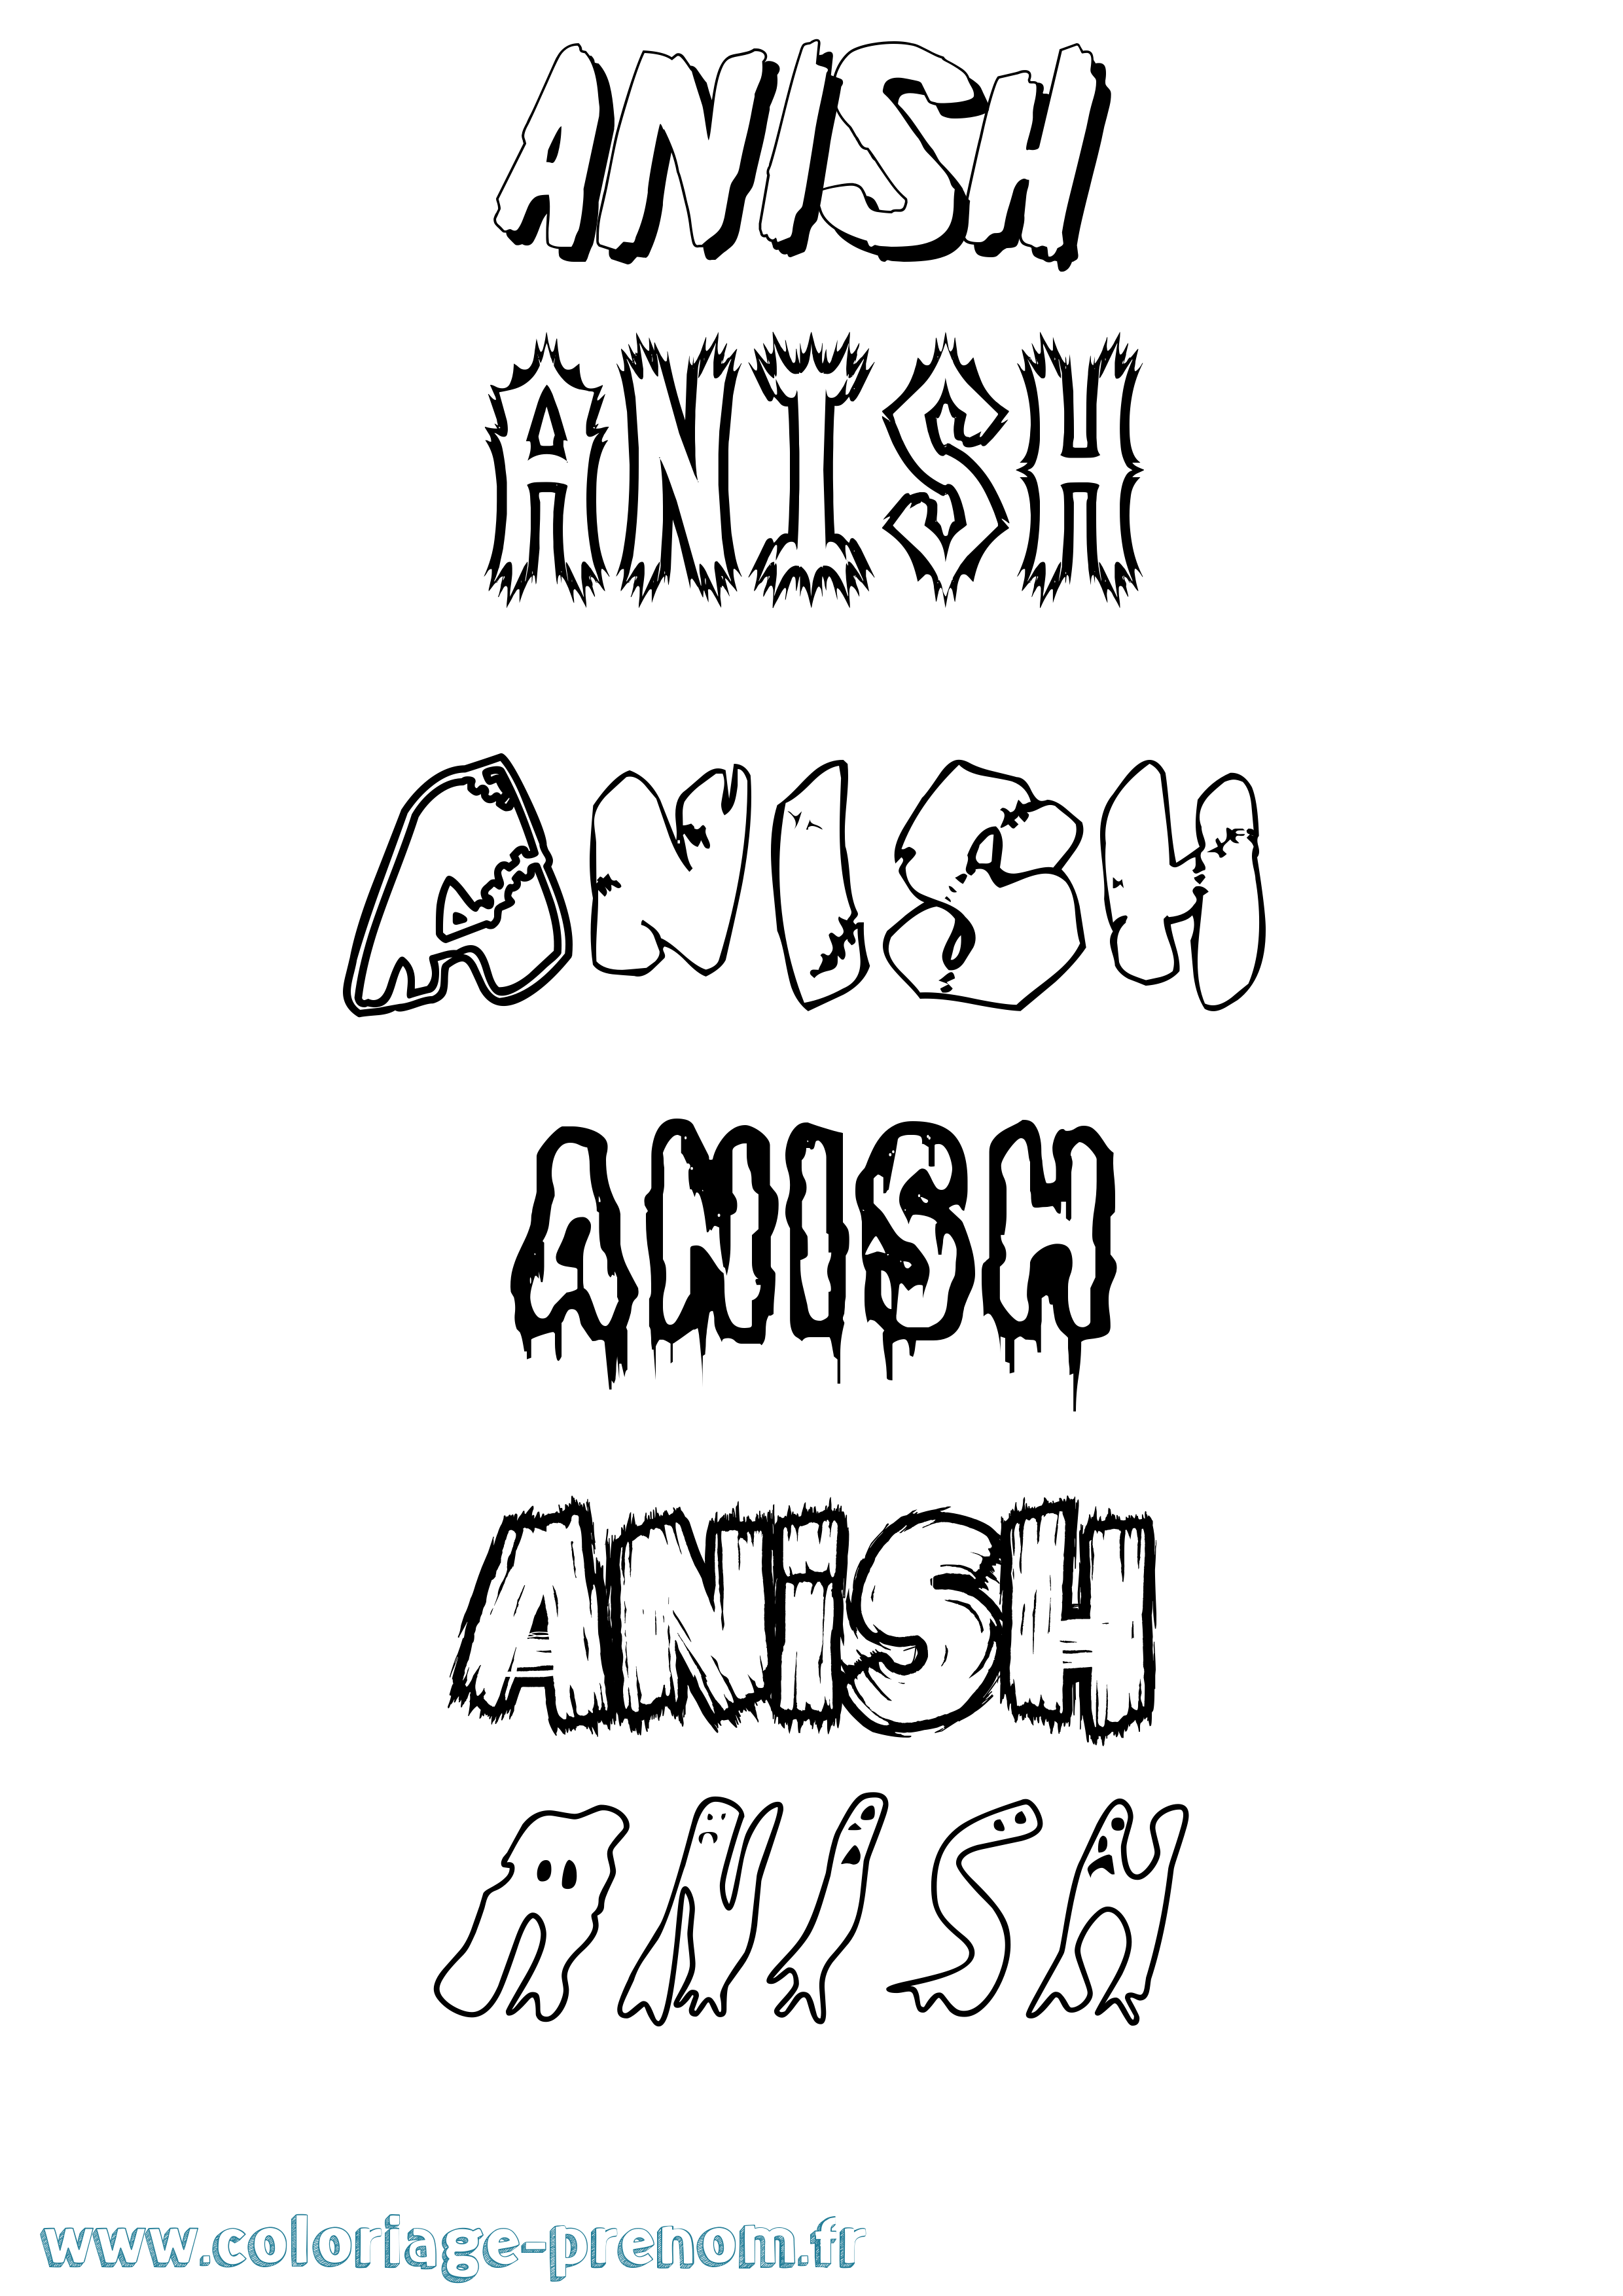 Coloriage prénom Anish Frisson